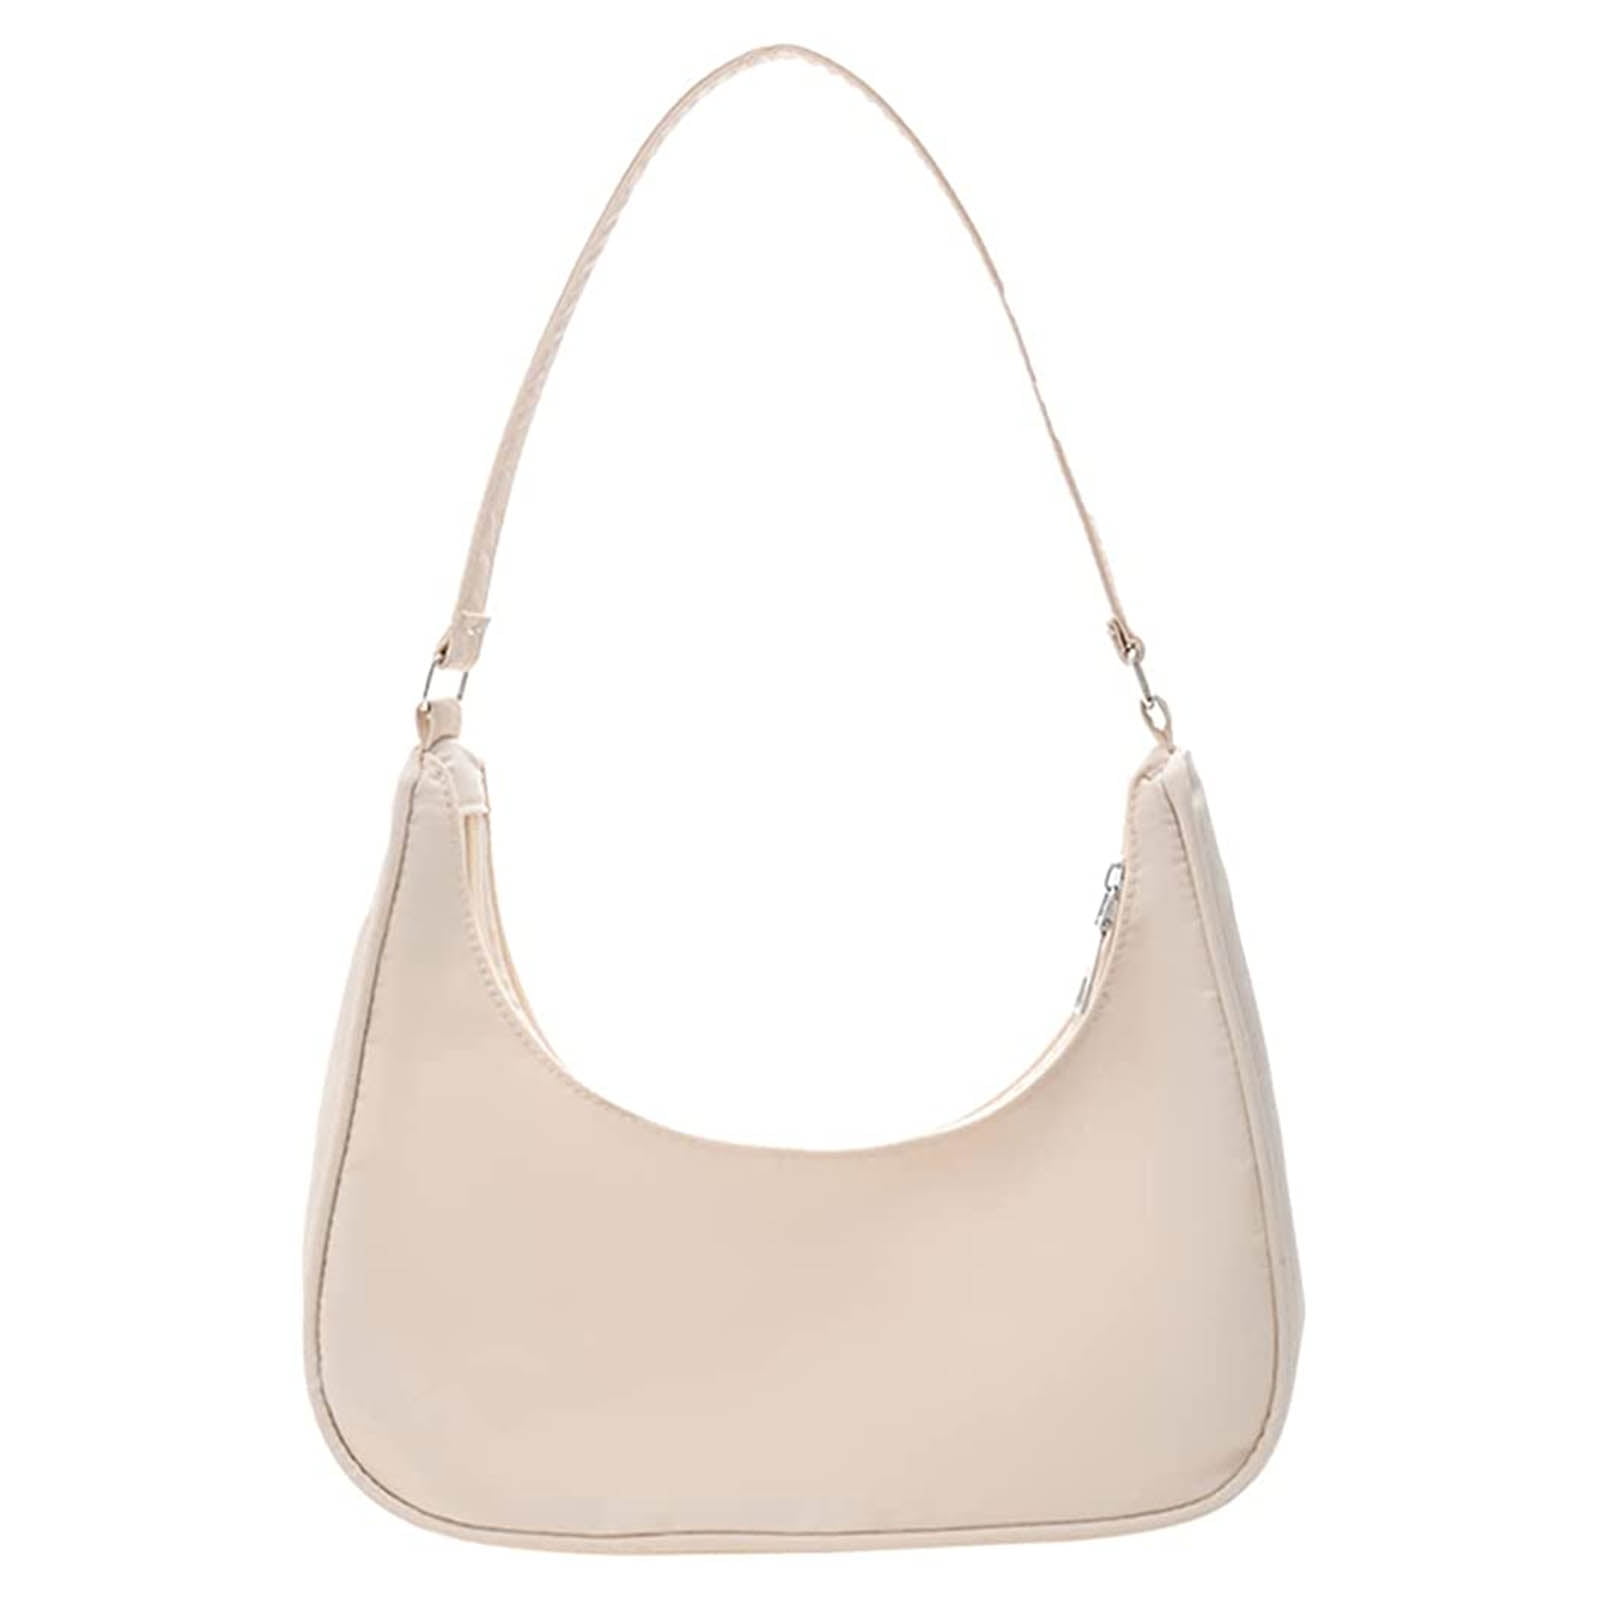 Clutch Purse Handbags, Small Nylon Handbag, Clutch Bags Women